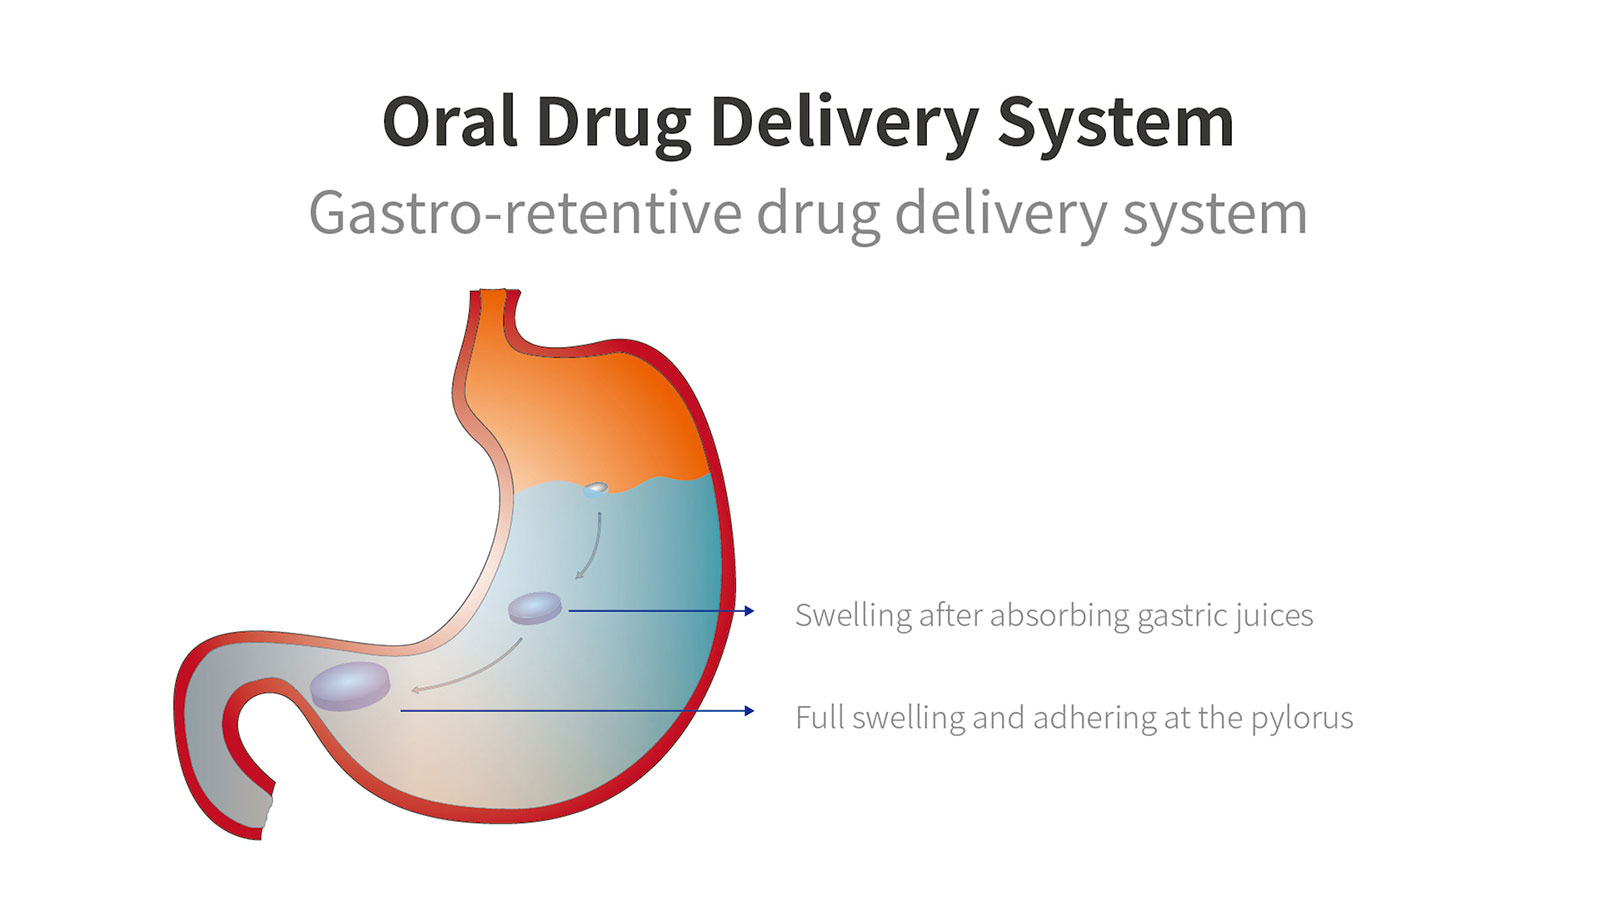 Gastro-retentive drug delivery system